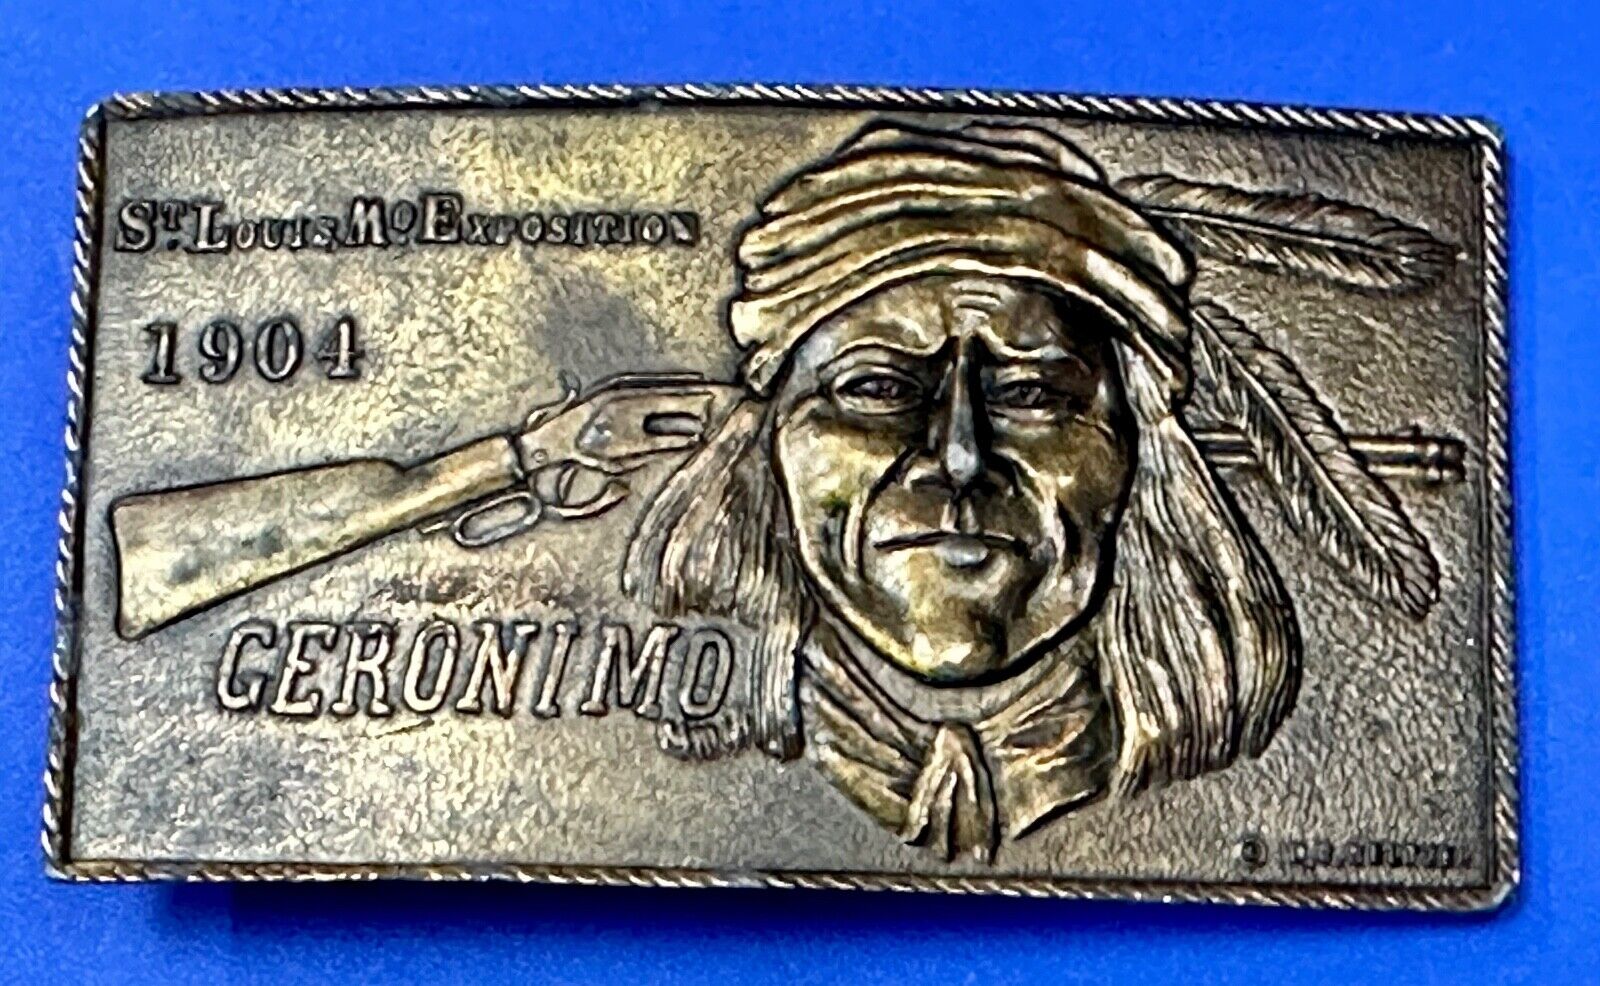 Geronimo - St. Louis Exposition 1904 Commemorative belt buckle by Lewis